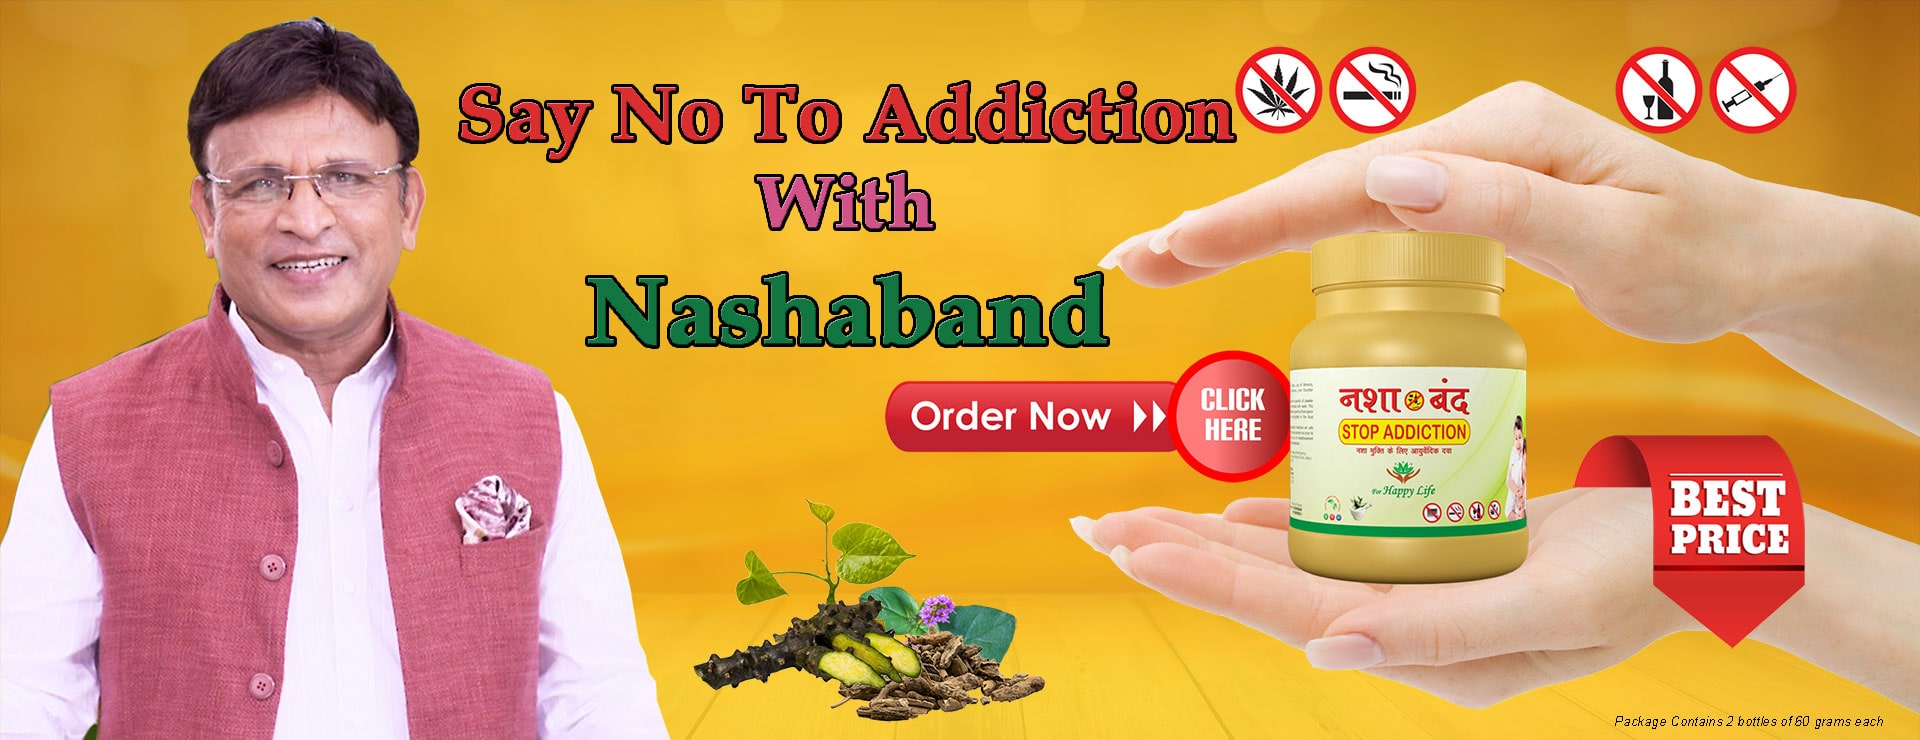 Nasha-band-banner-4